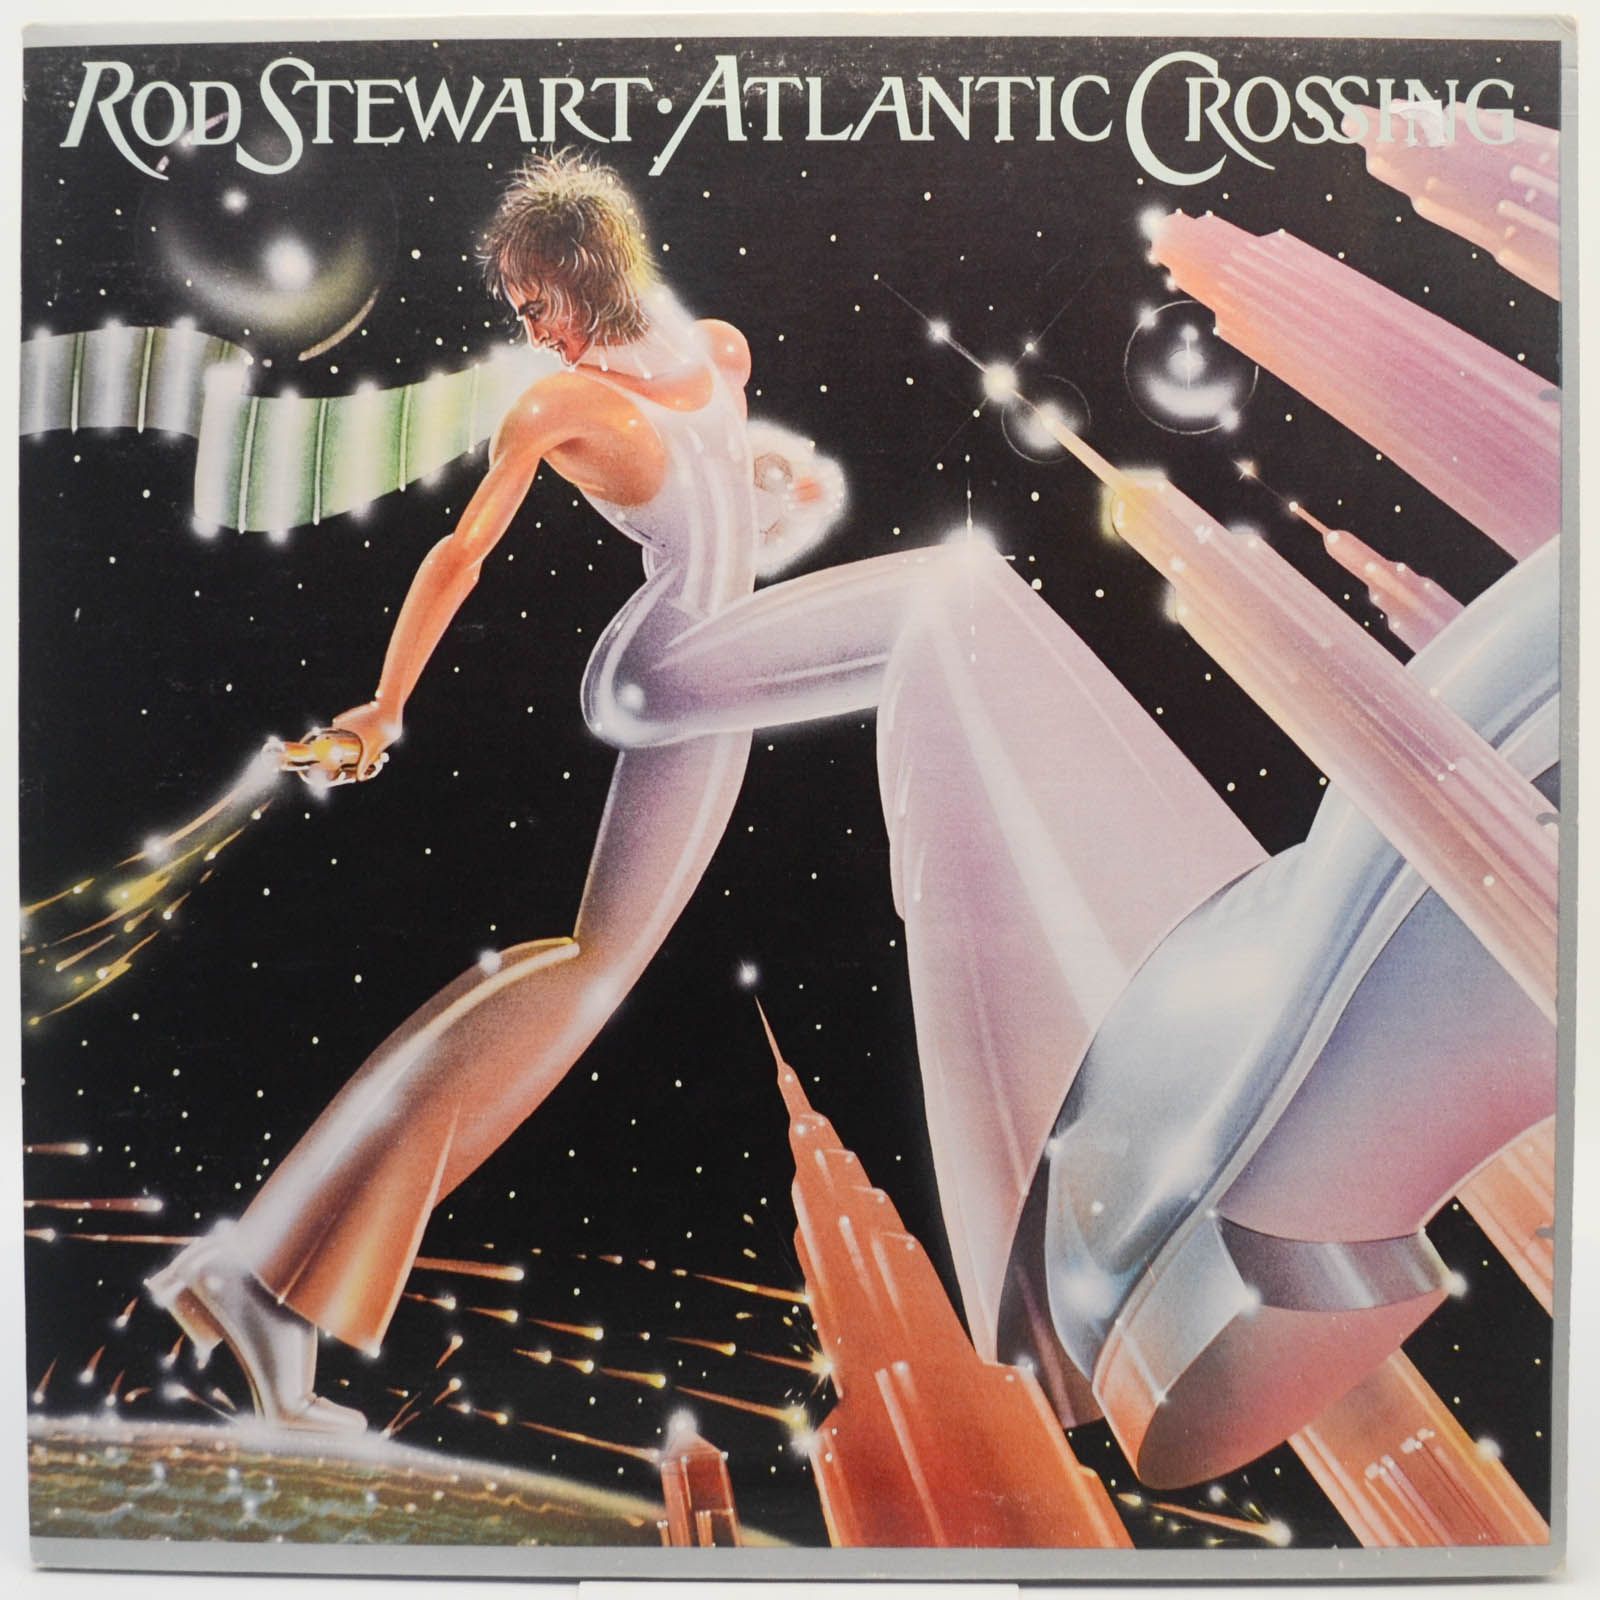 Rod Stewart — Atlantic Crossing, 1975